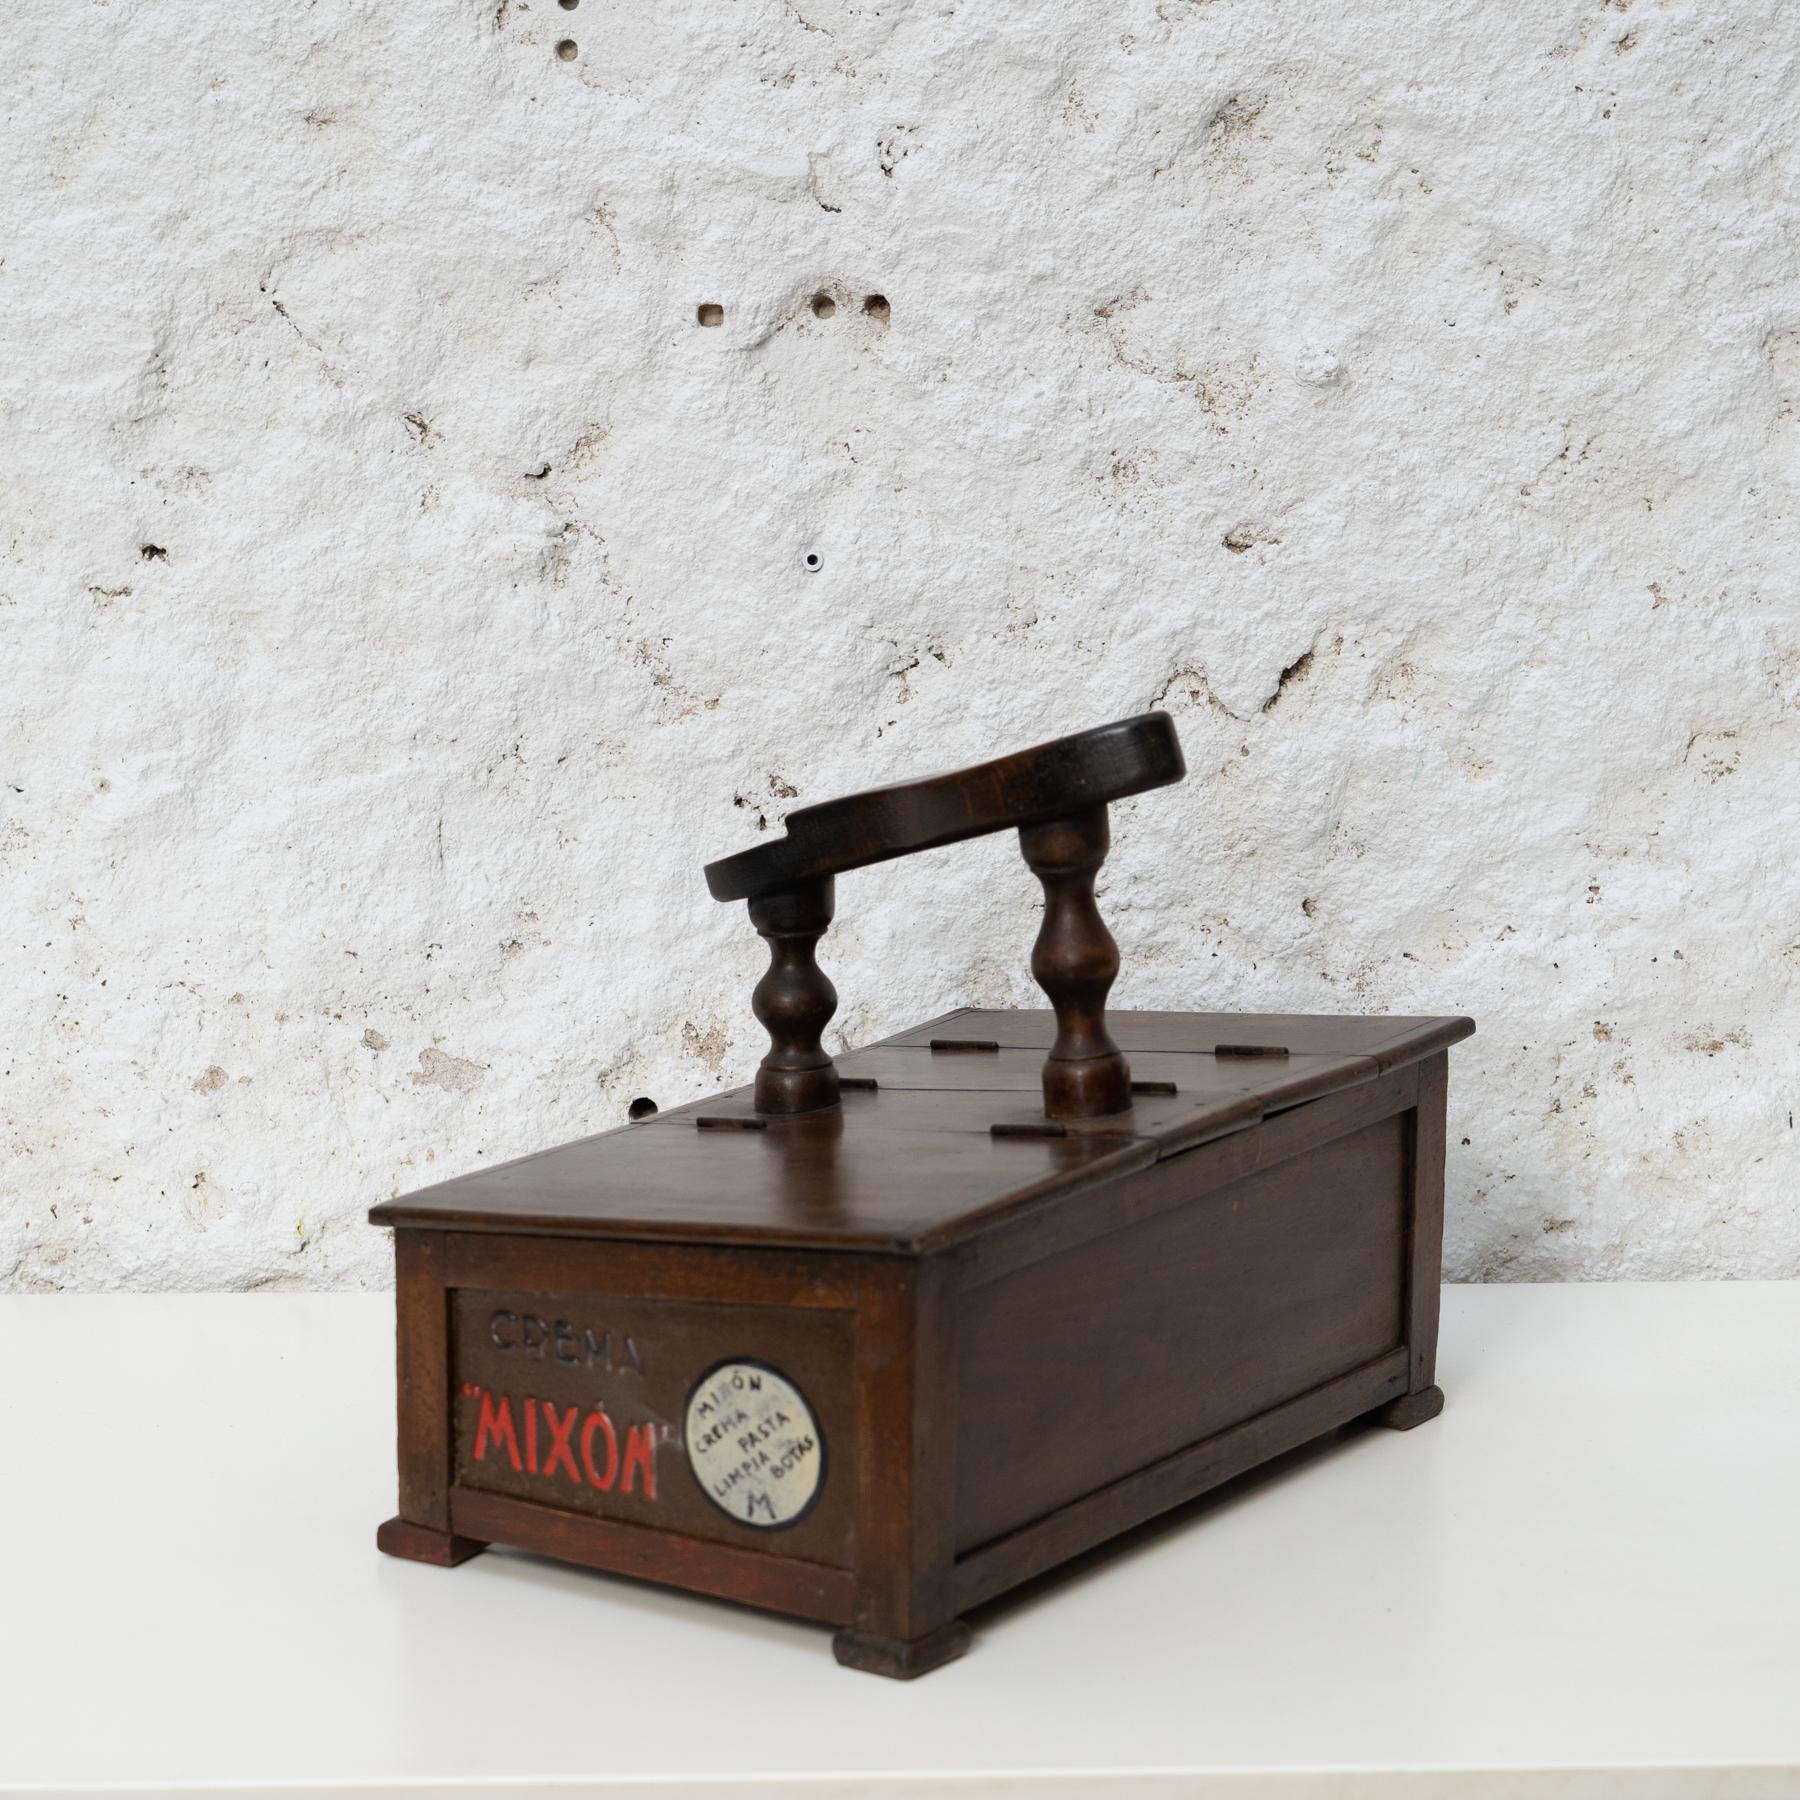 Nostalgic Craft: Hand-Painted Shoeshiner Box, Wood and Metal, c. 1930 1